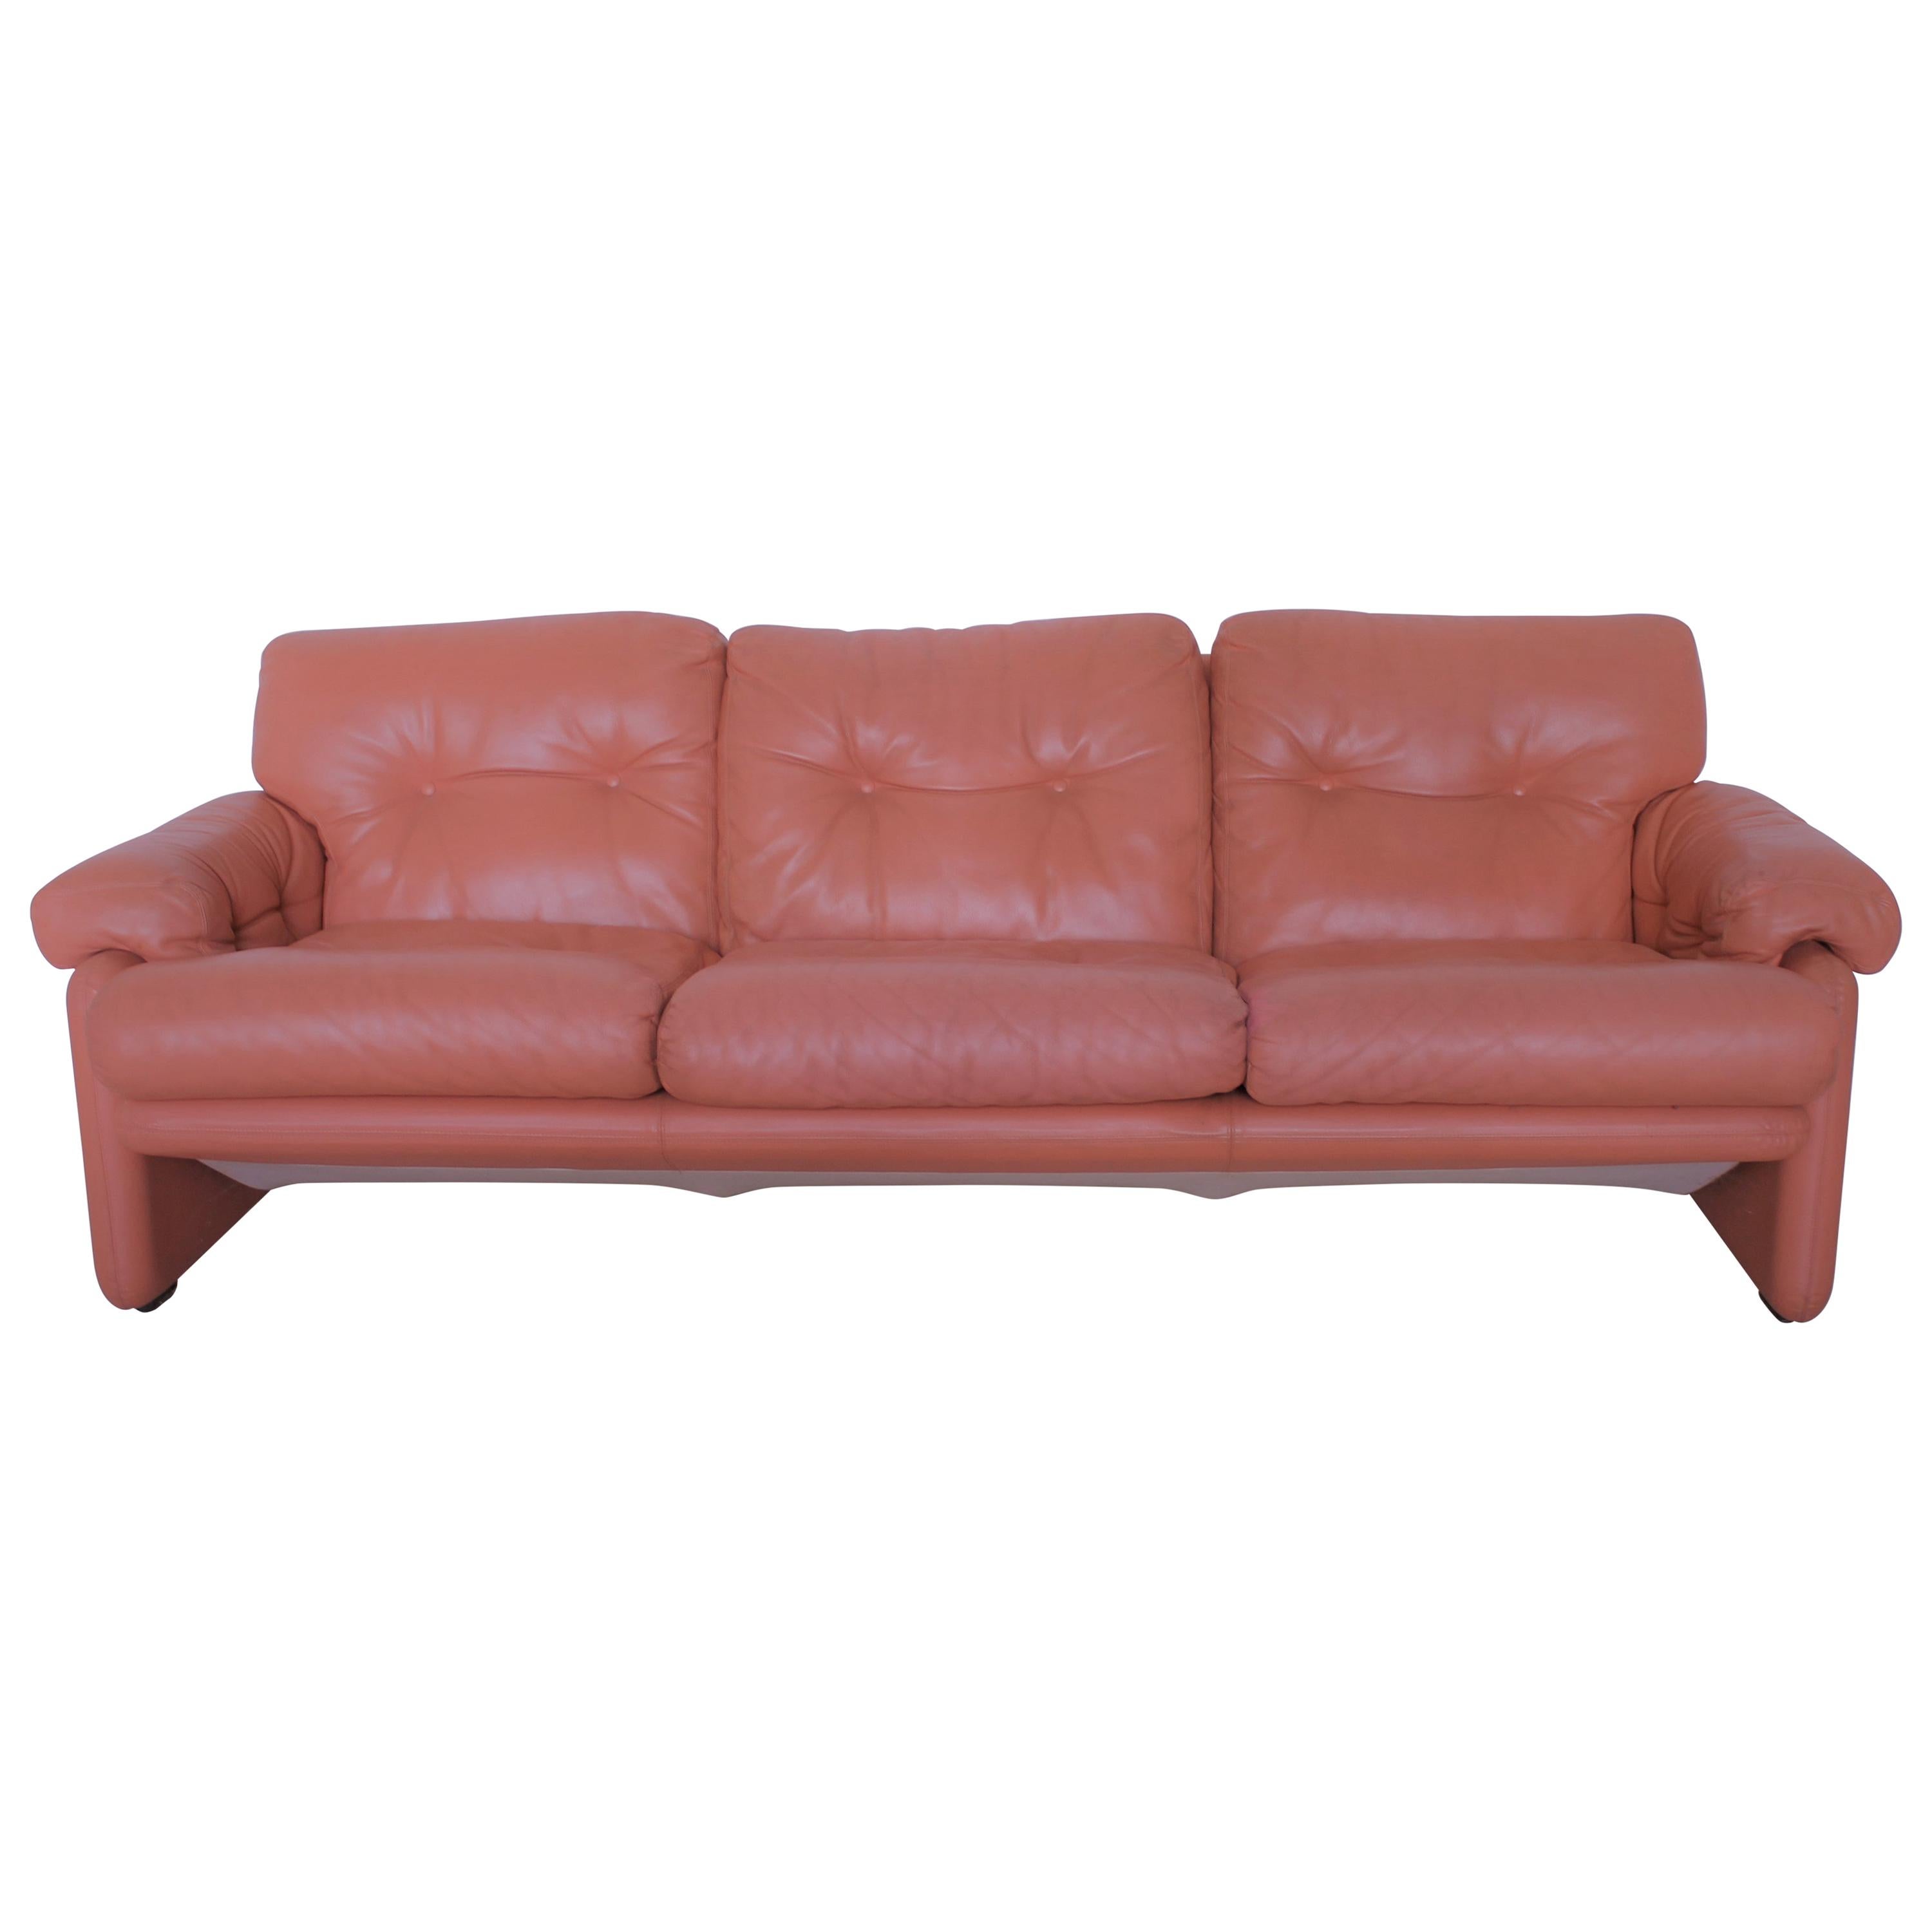 Tobia Scarpa "Coronado" Salmon Pink Leather Three-Seats Sofa for B&B